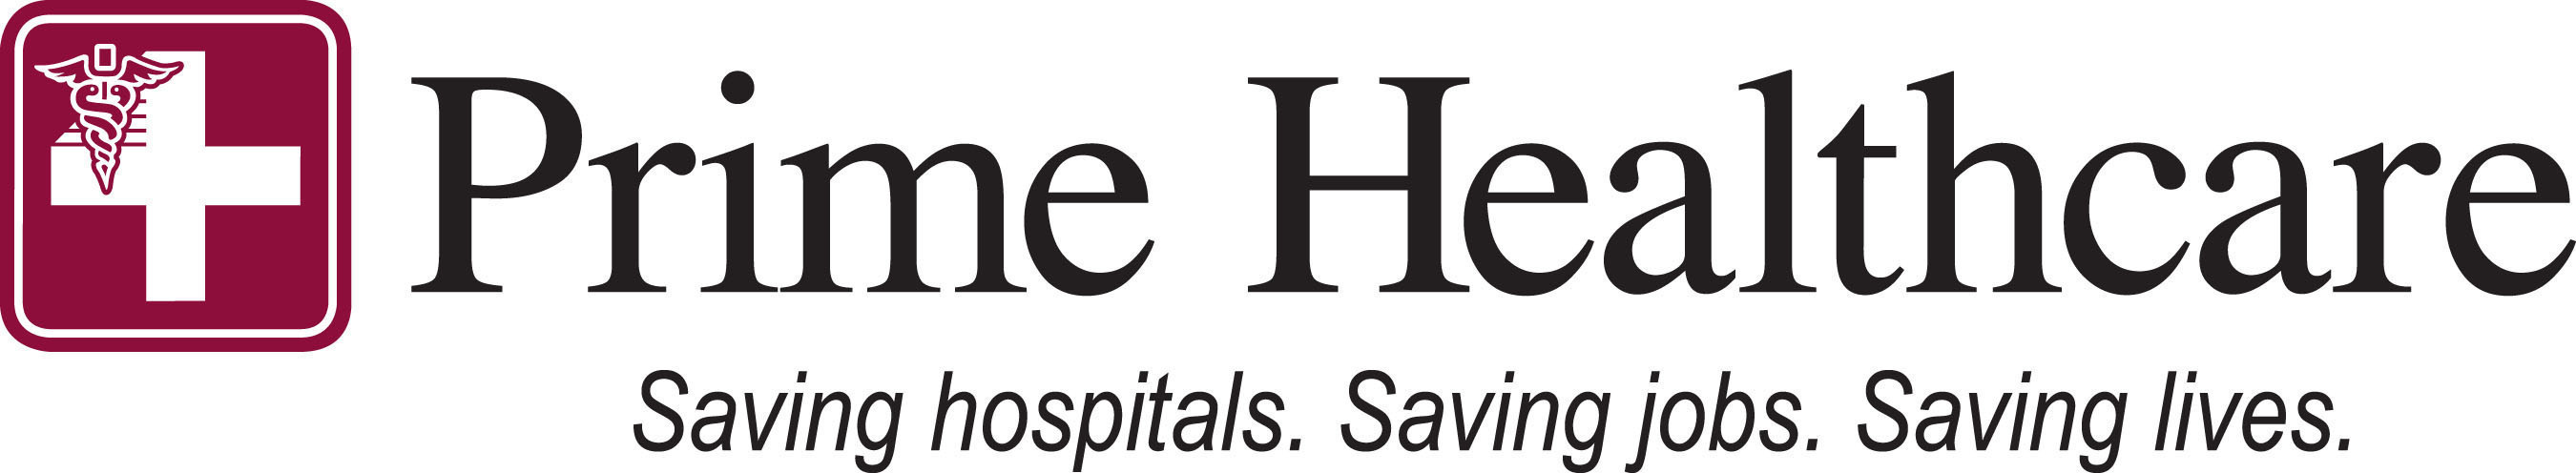 Prime Healthcare logo (PRNewsFoto/Prime Healthcare)